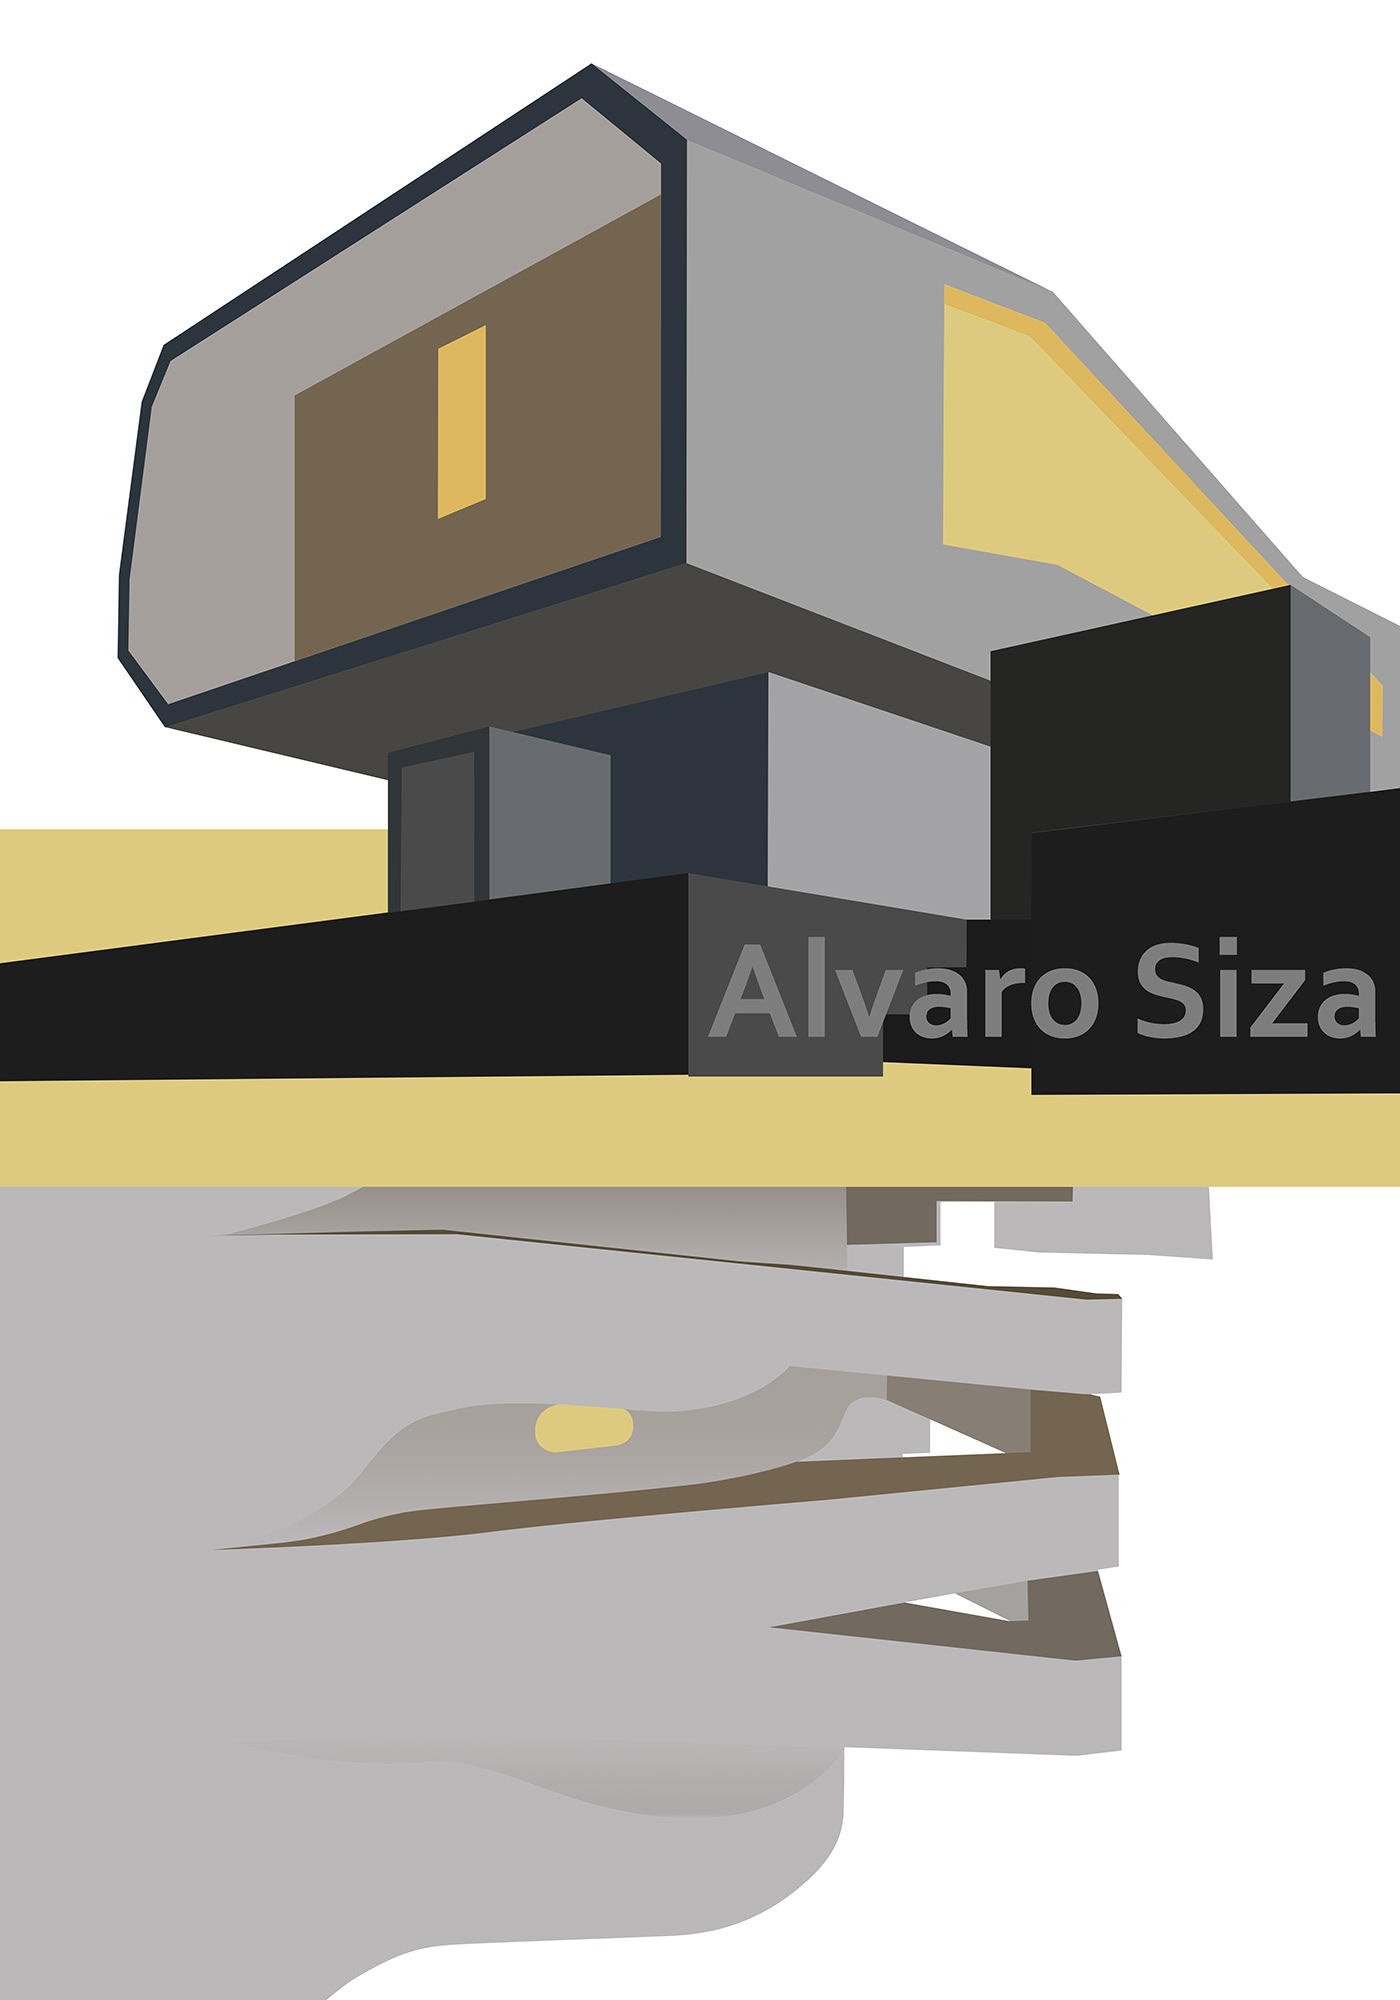 Alvaro Siza architecture poster banner designer Socialmedia Graphic Designer Adobe Photoshop графический дизайн Плакатная графика